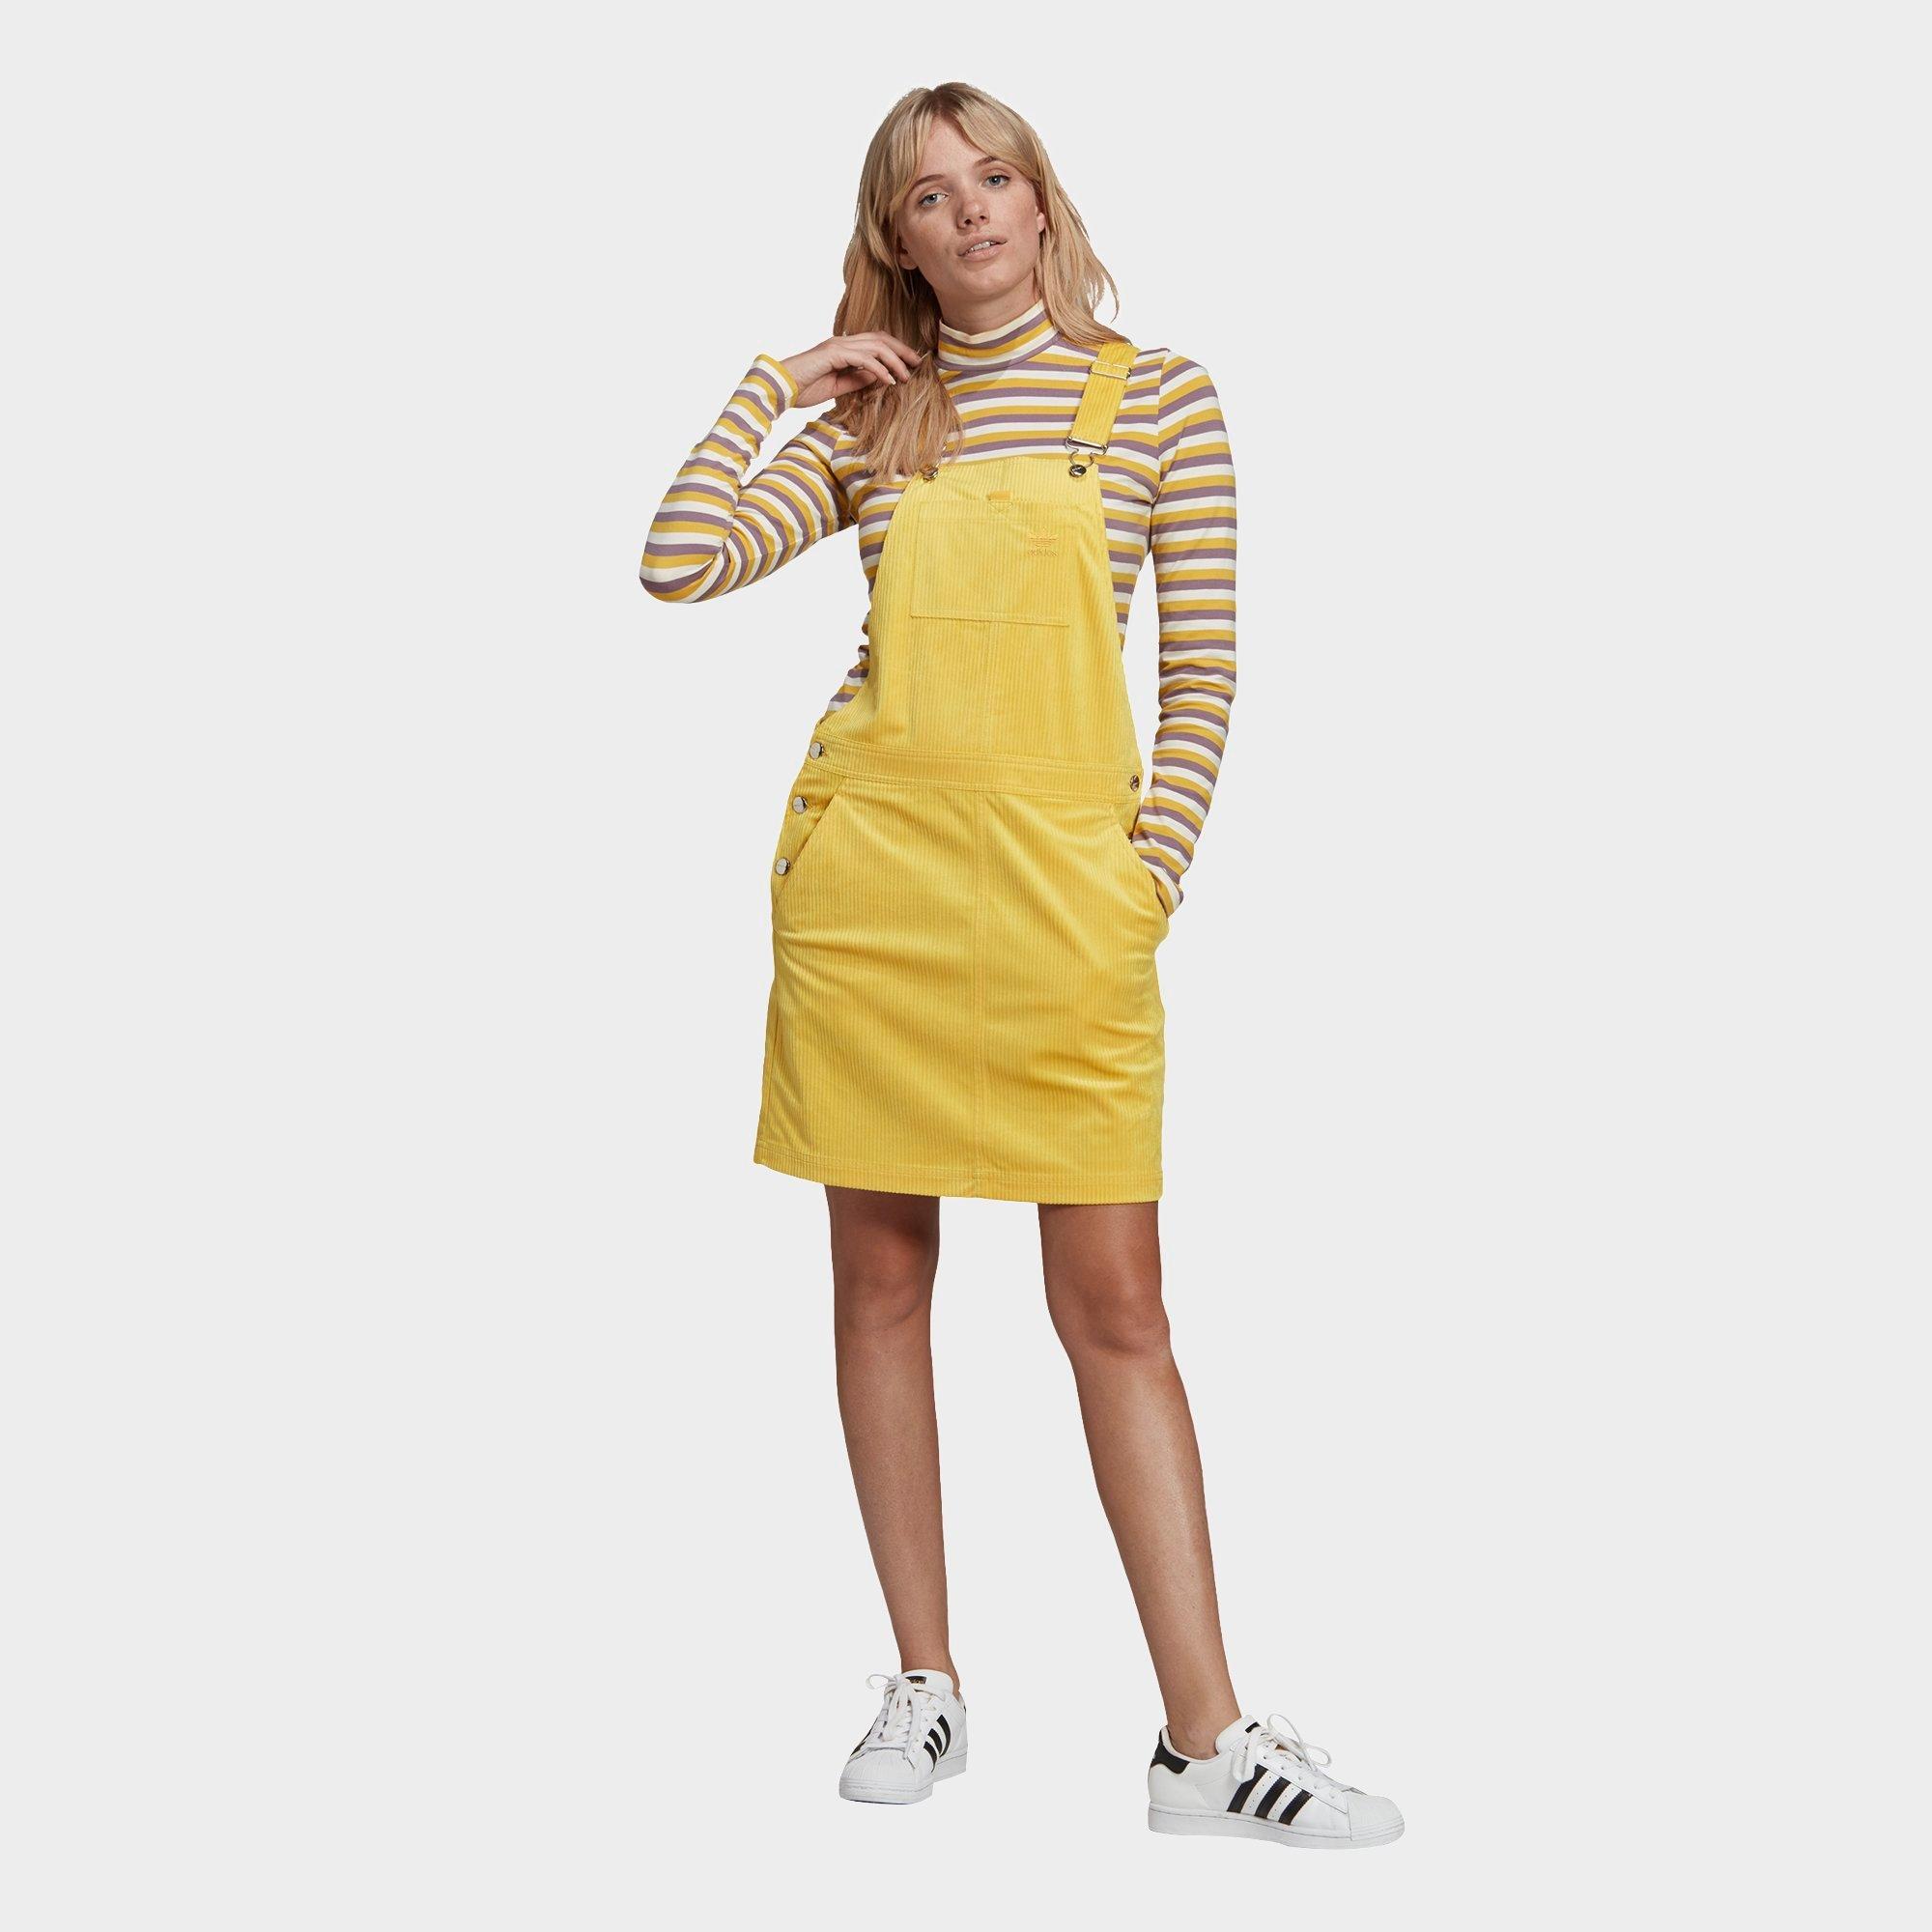 yellow corduroy overall dress